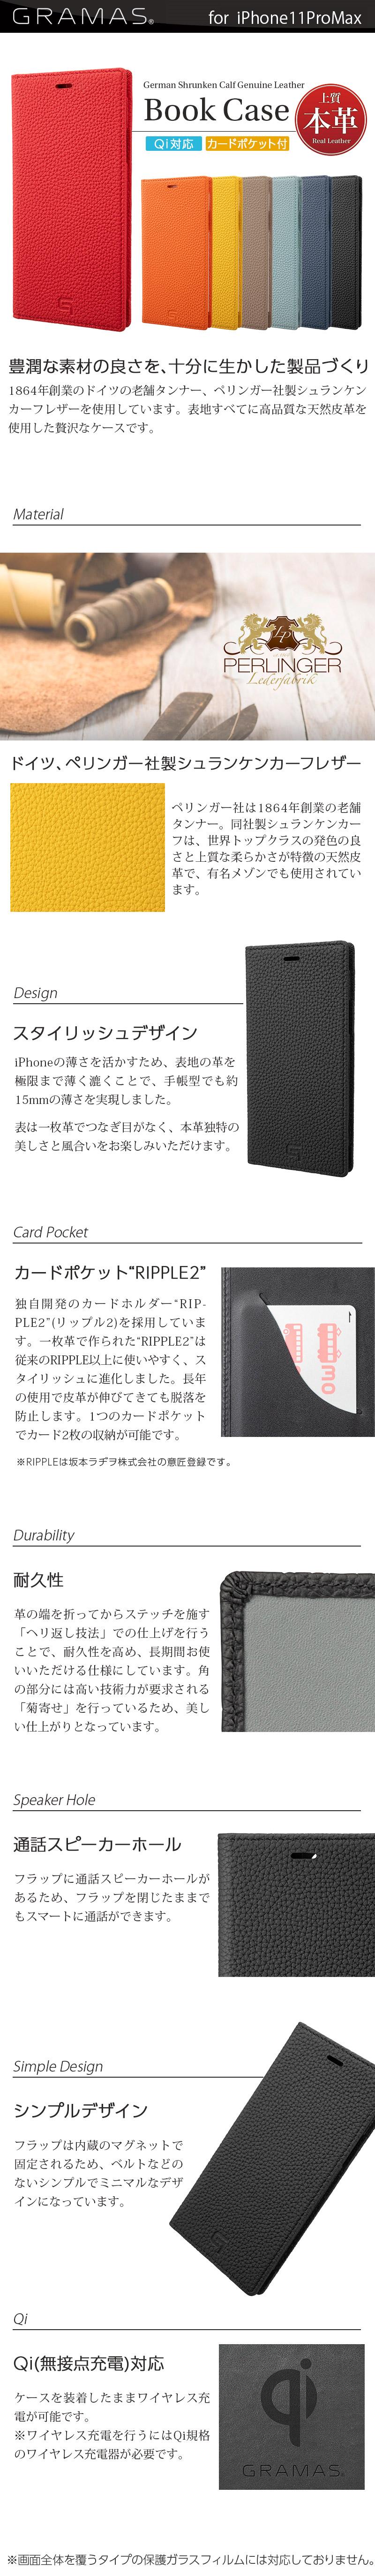 GRAMAS Shrunken-calf Leather Book Case』 iPhone 11 Pro Max ケース 